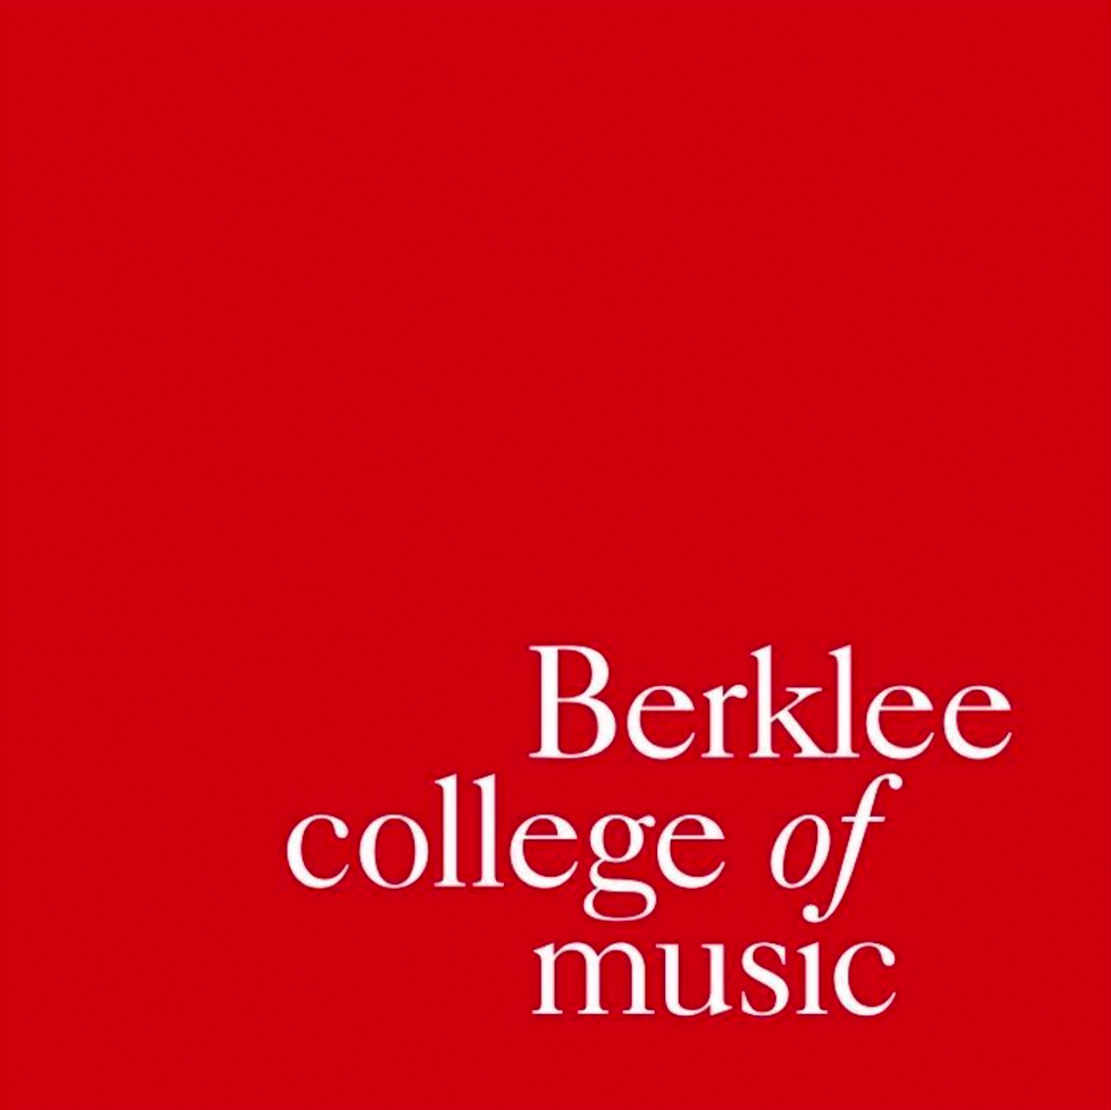 Berklee college of music logo